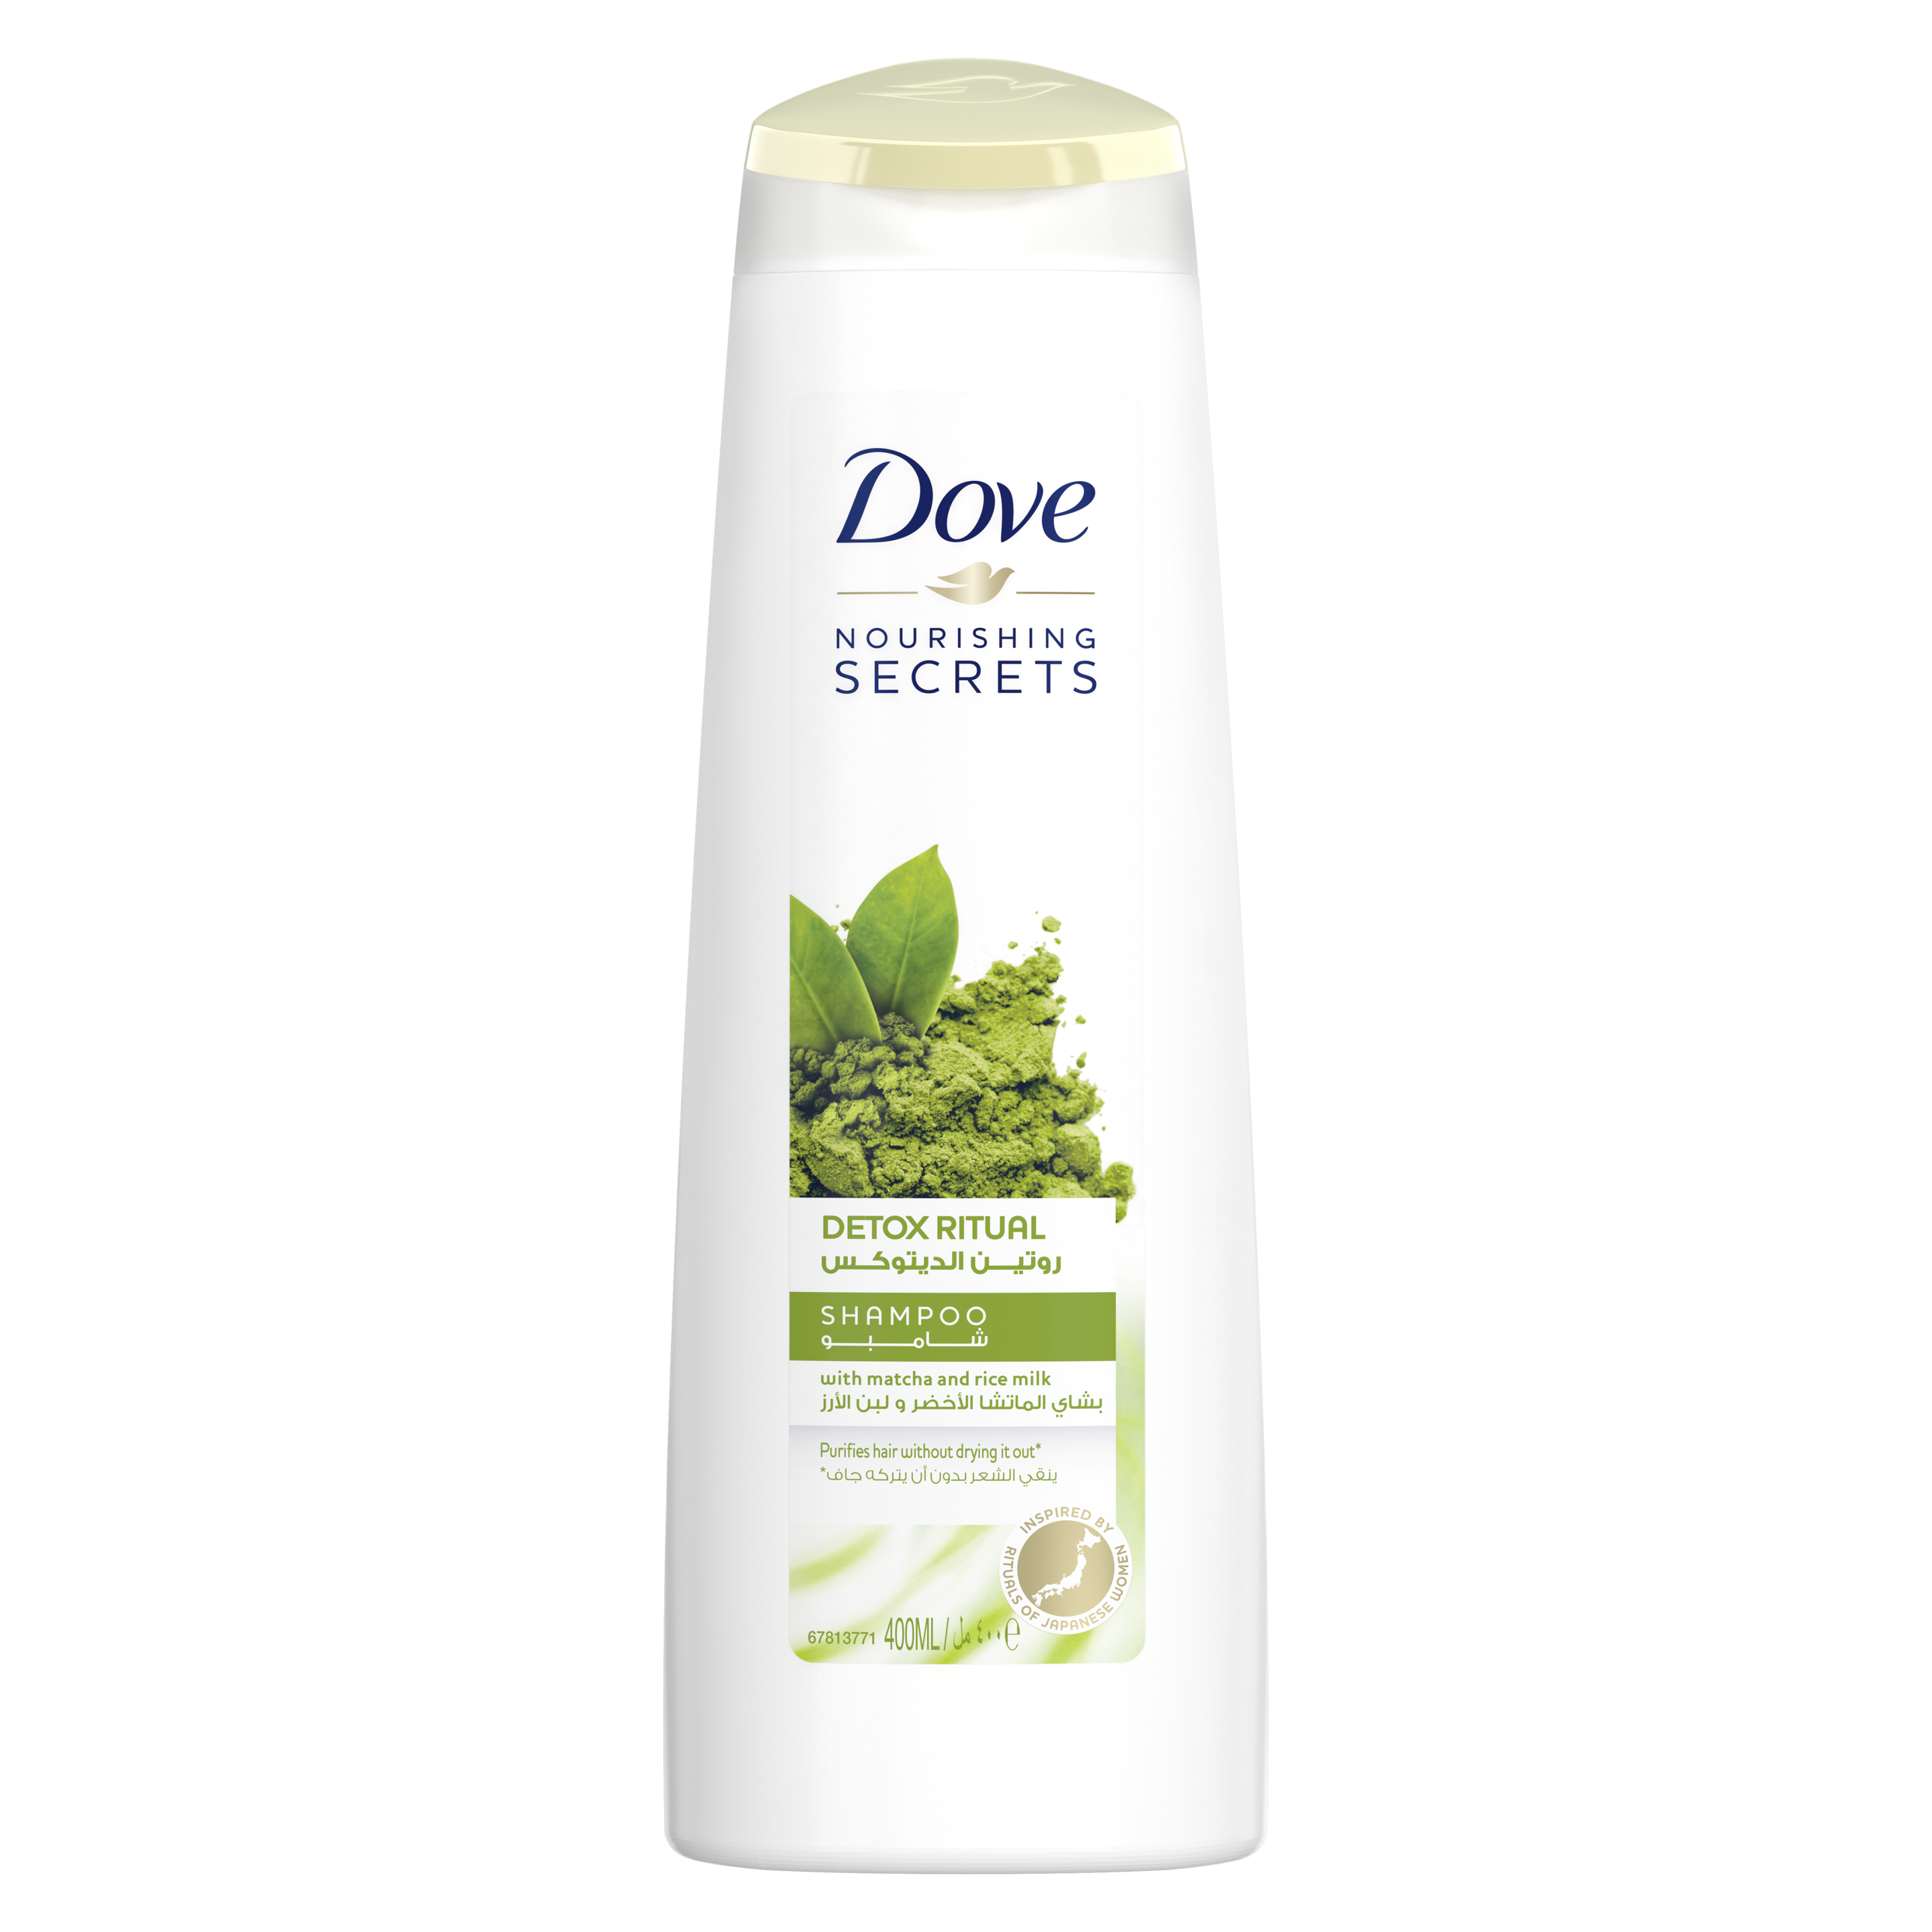 Dove Nourishing Secrets Shampoo Detox Ritual - Matcha and Rice Milk 400ml